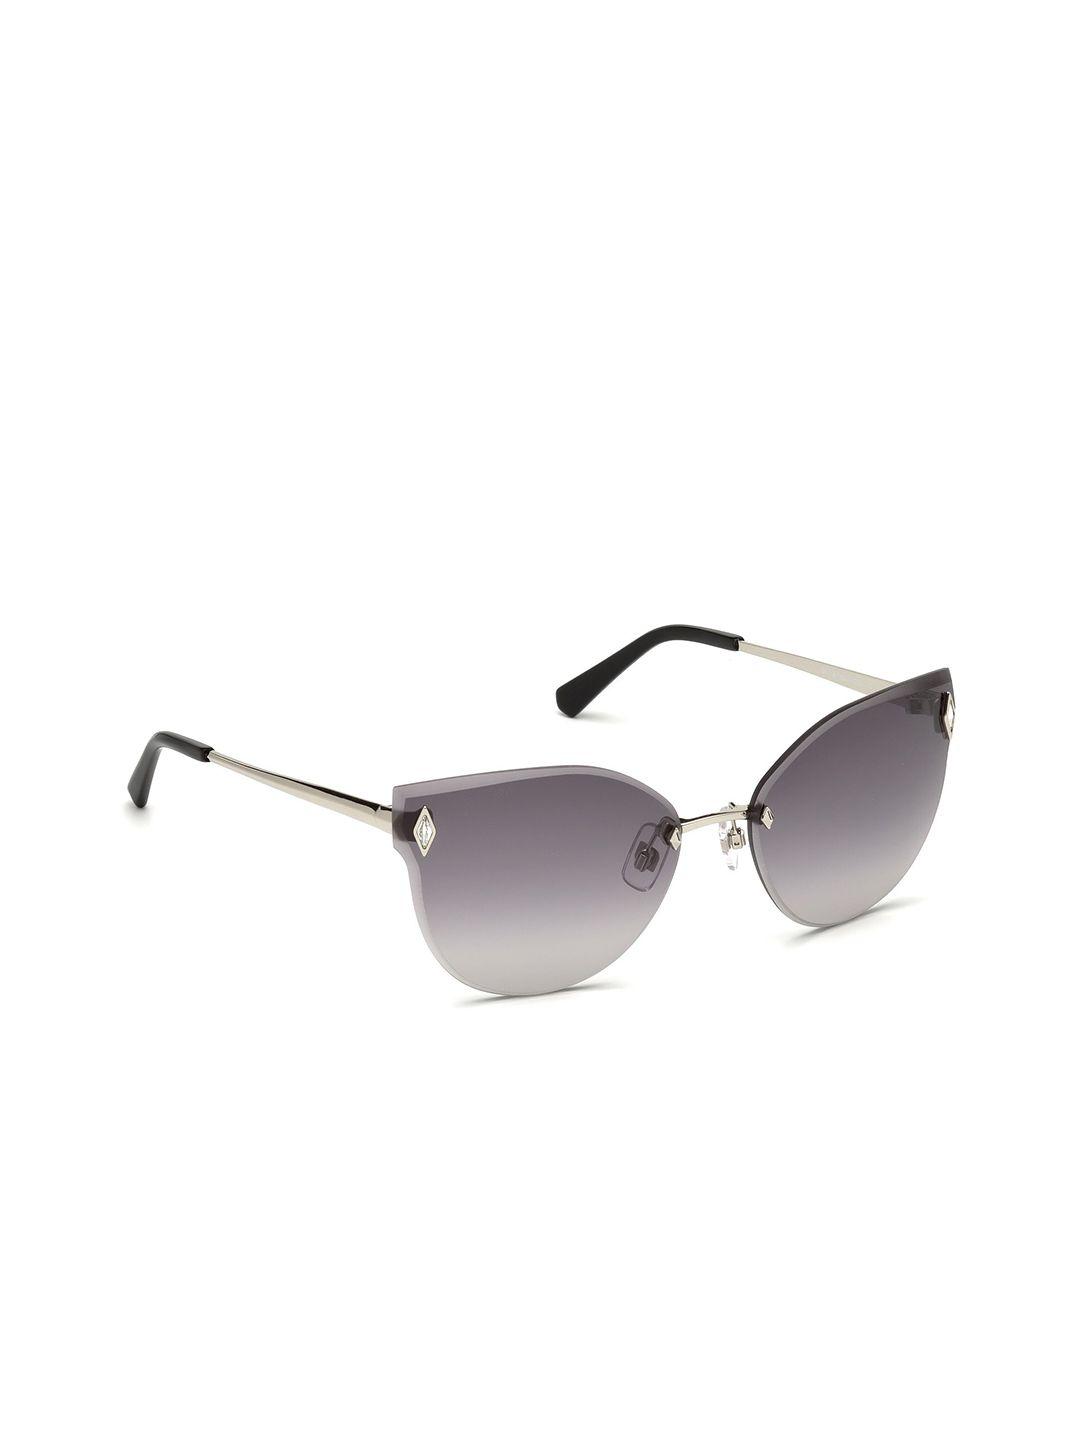 swarovski-women-grey-sunglasses